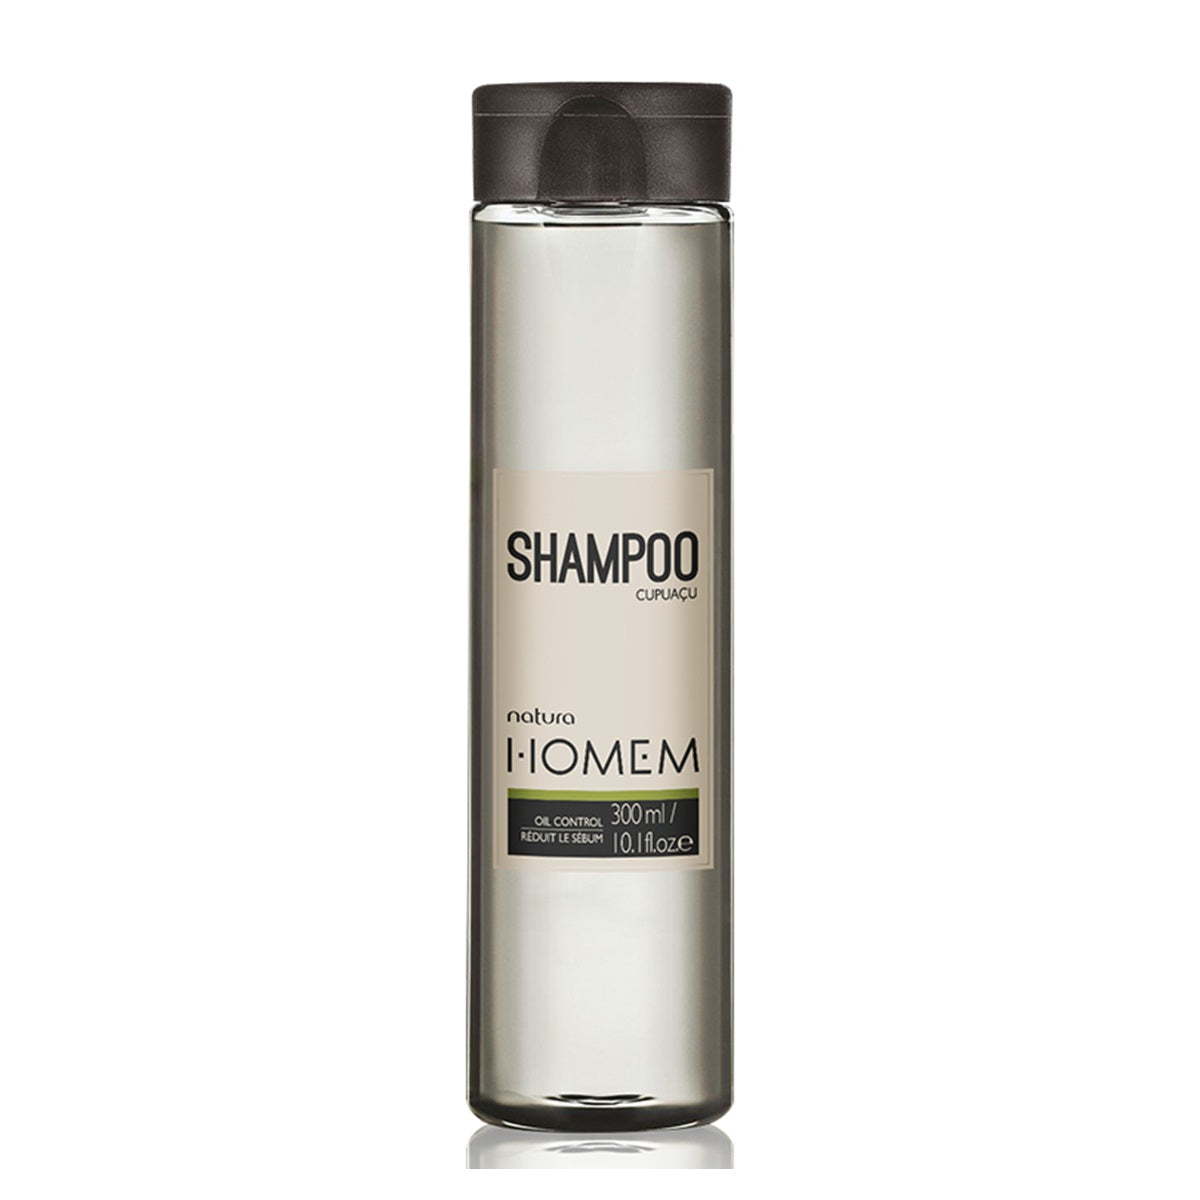 Homem Shampoo Cupuacu Oil Control 300ml